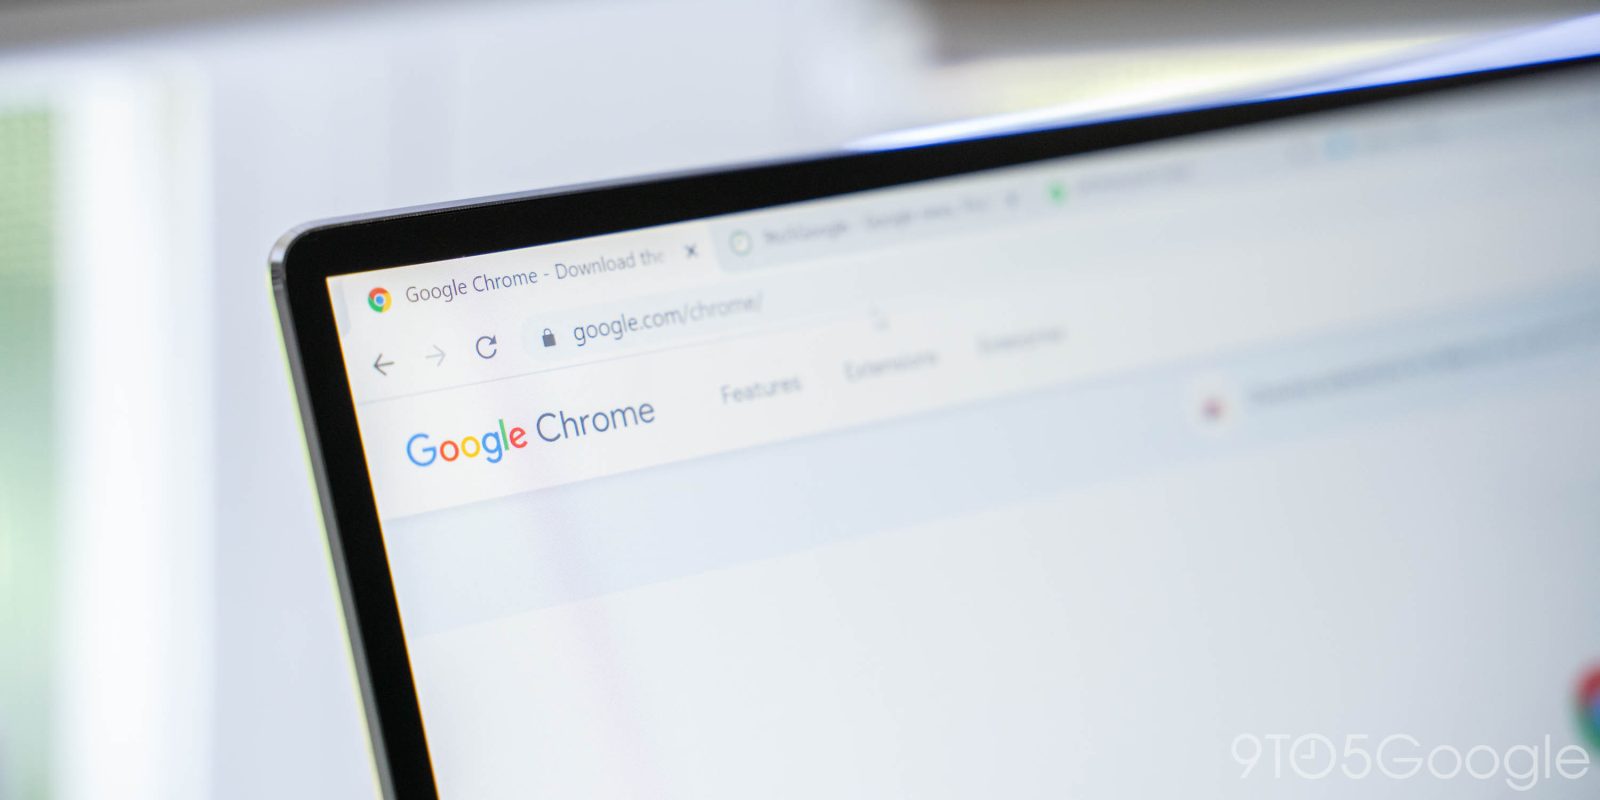 Google Chrome tabs and address bar